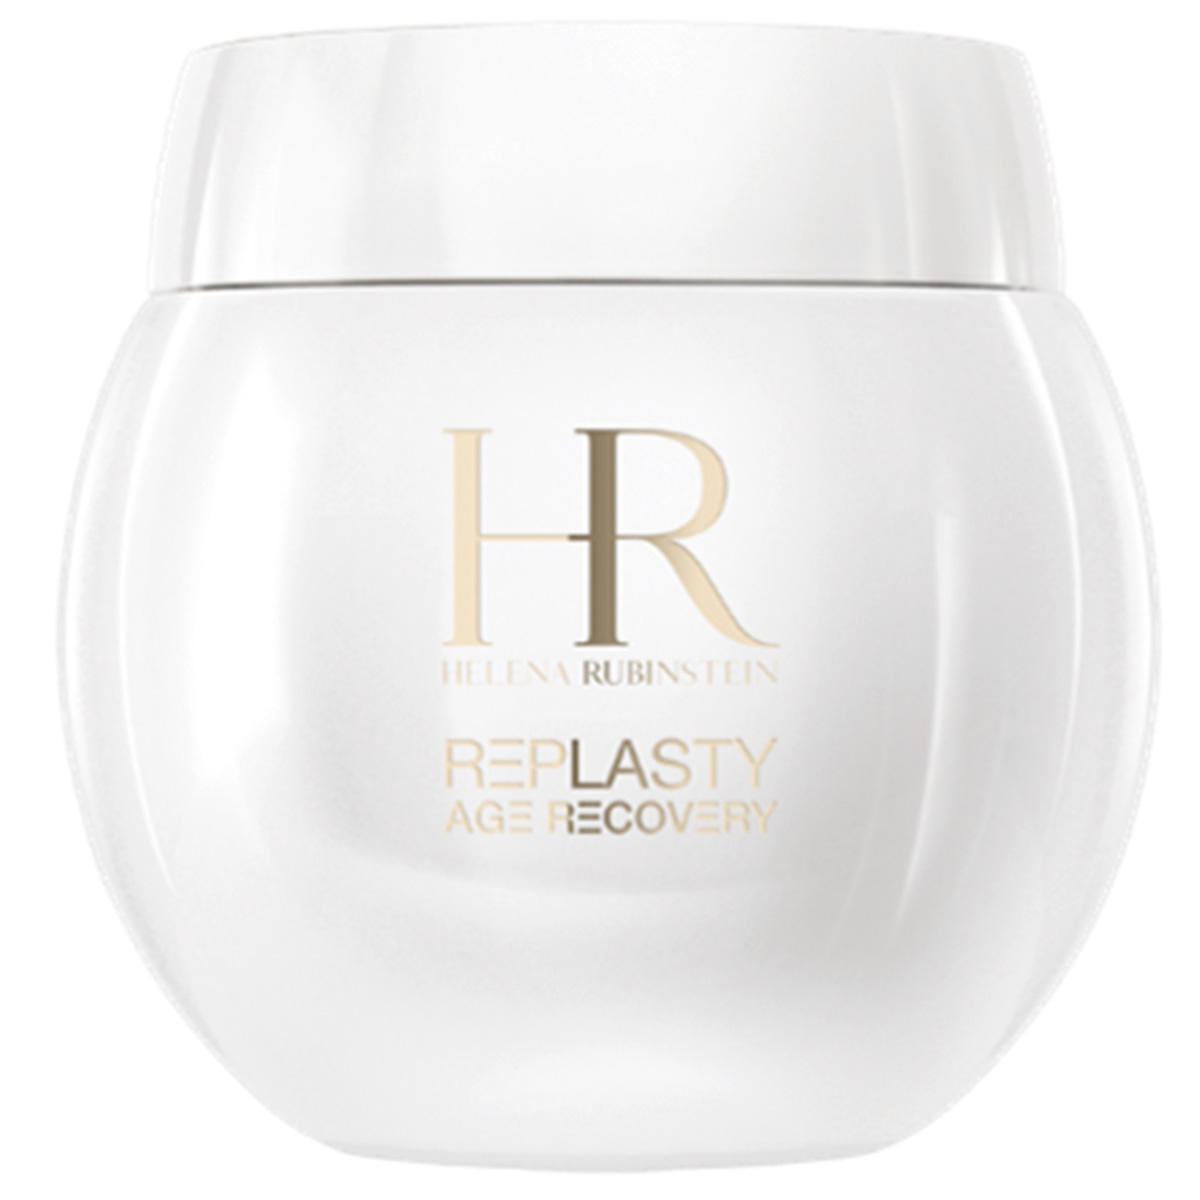 Helena Rubinstein Re-PLASTY Age Recovery Day Cream 15 ml - 1